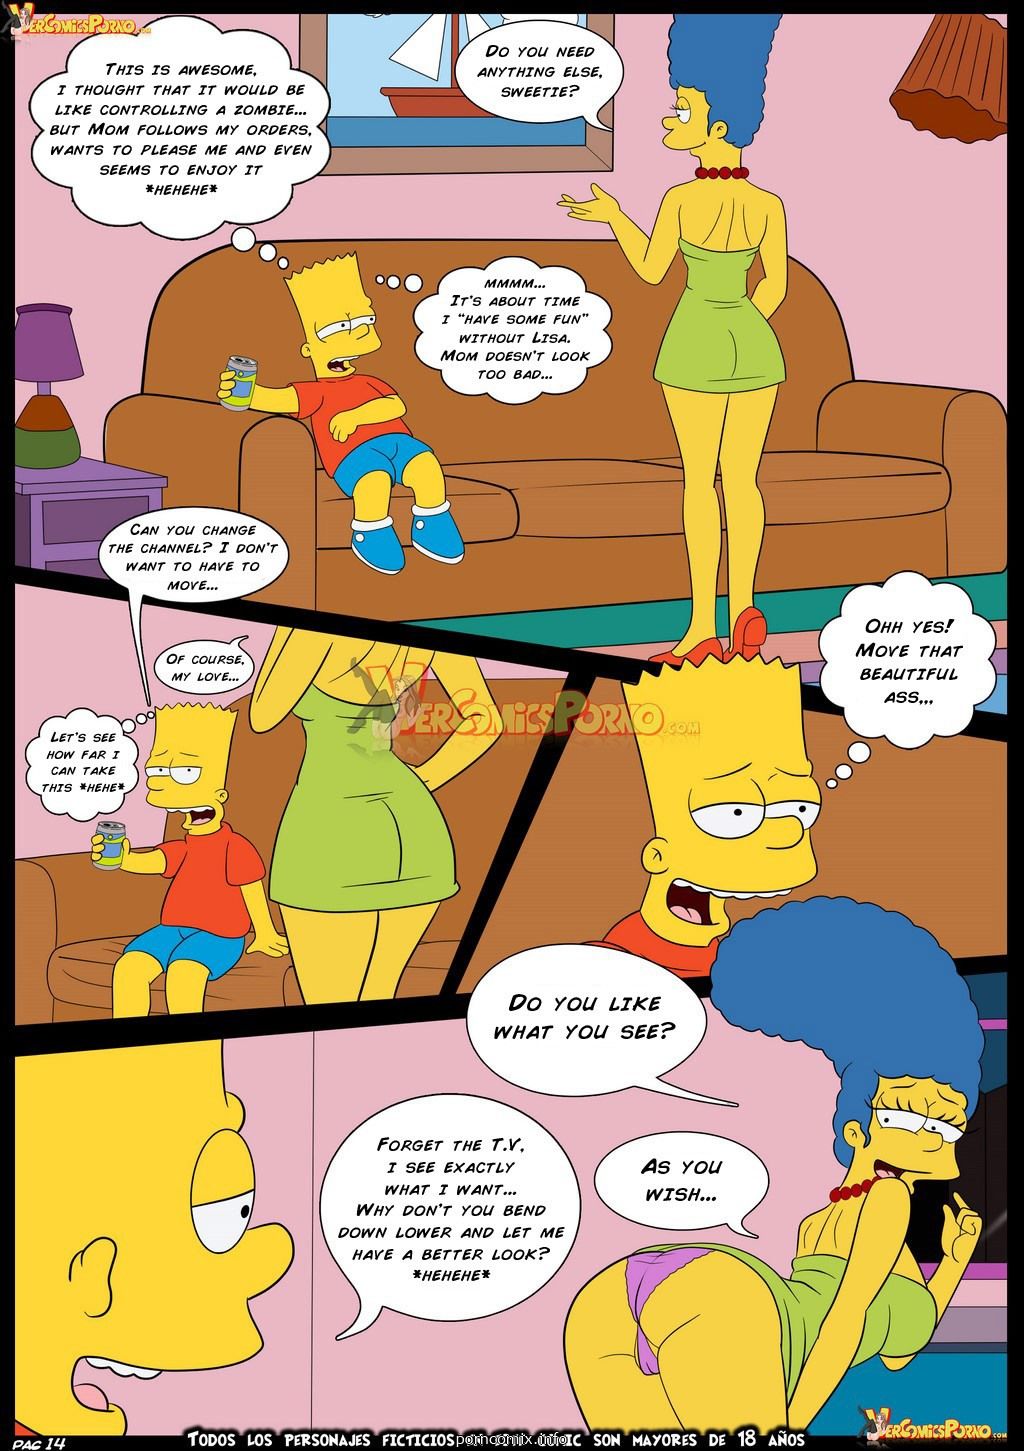 [CROC] The Simpsons / Futurama - Future purchase page 15